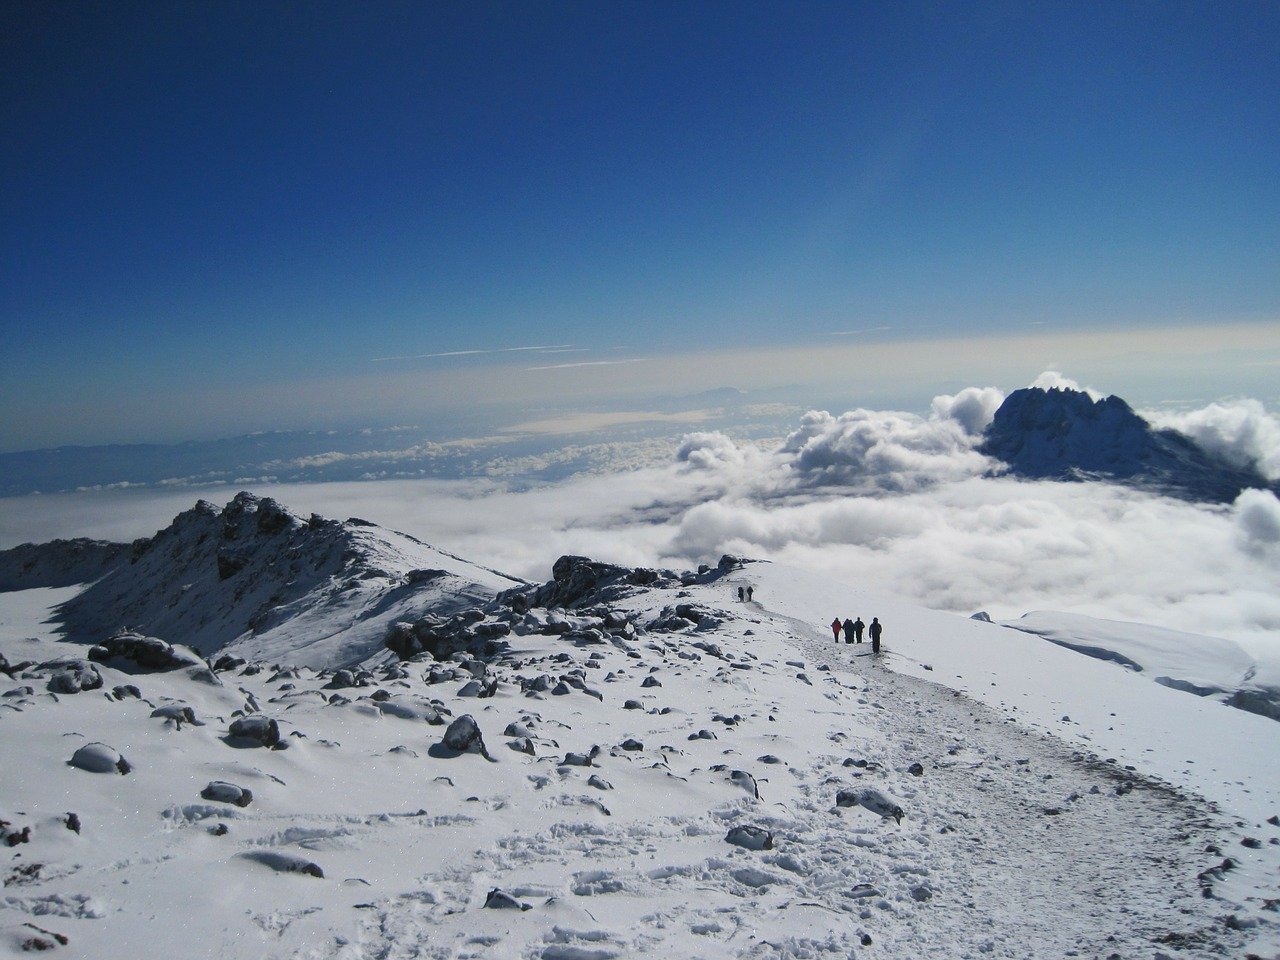 Day 1: Machame Gate (1490 m) – Machame Camp (2980 m)